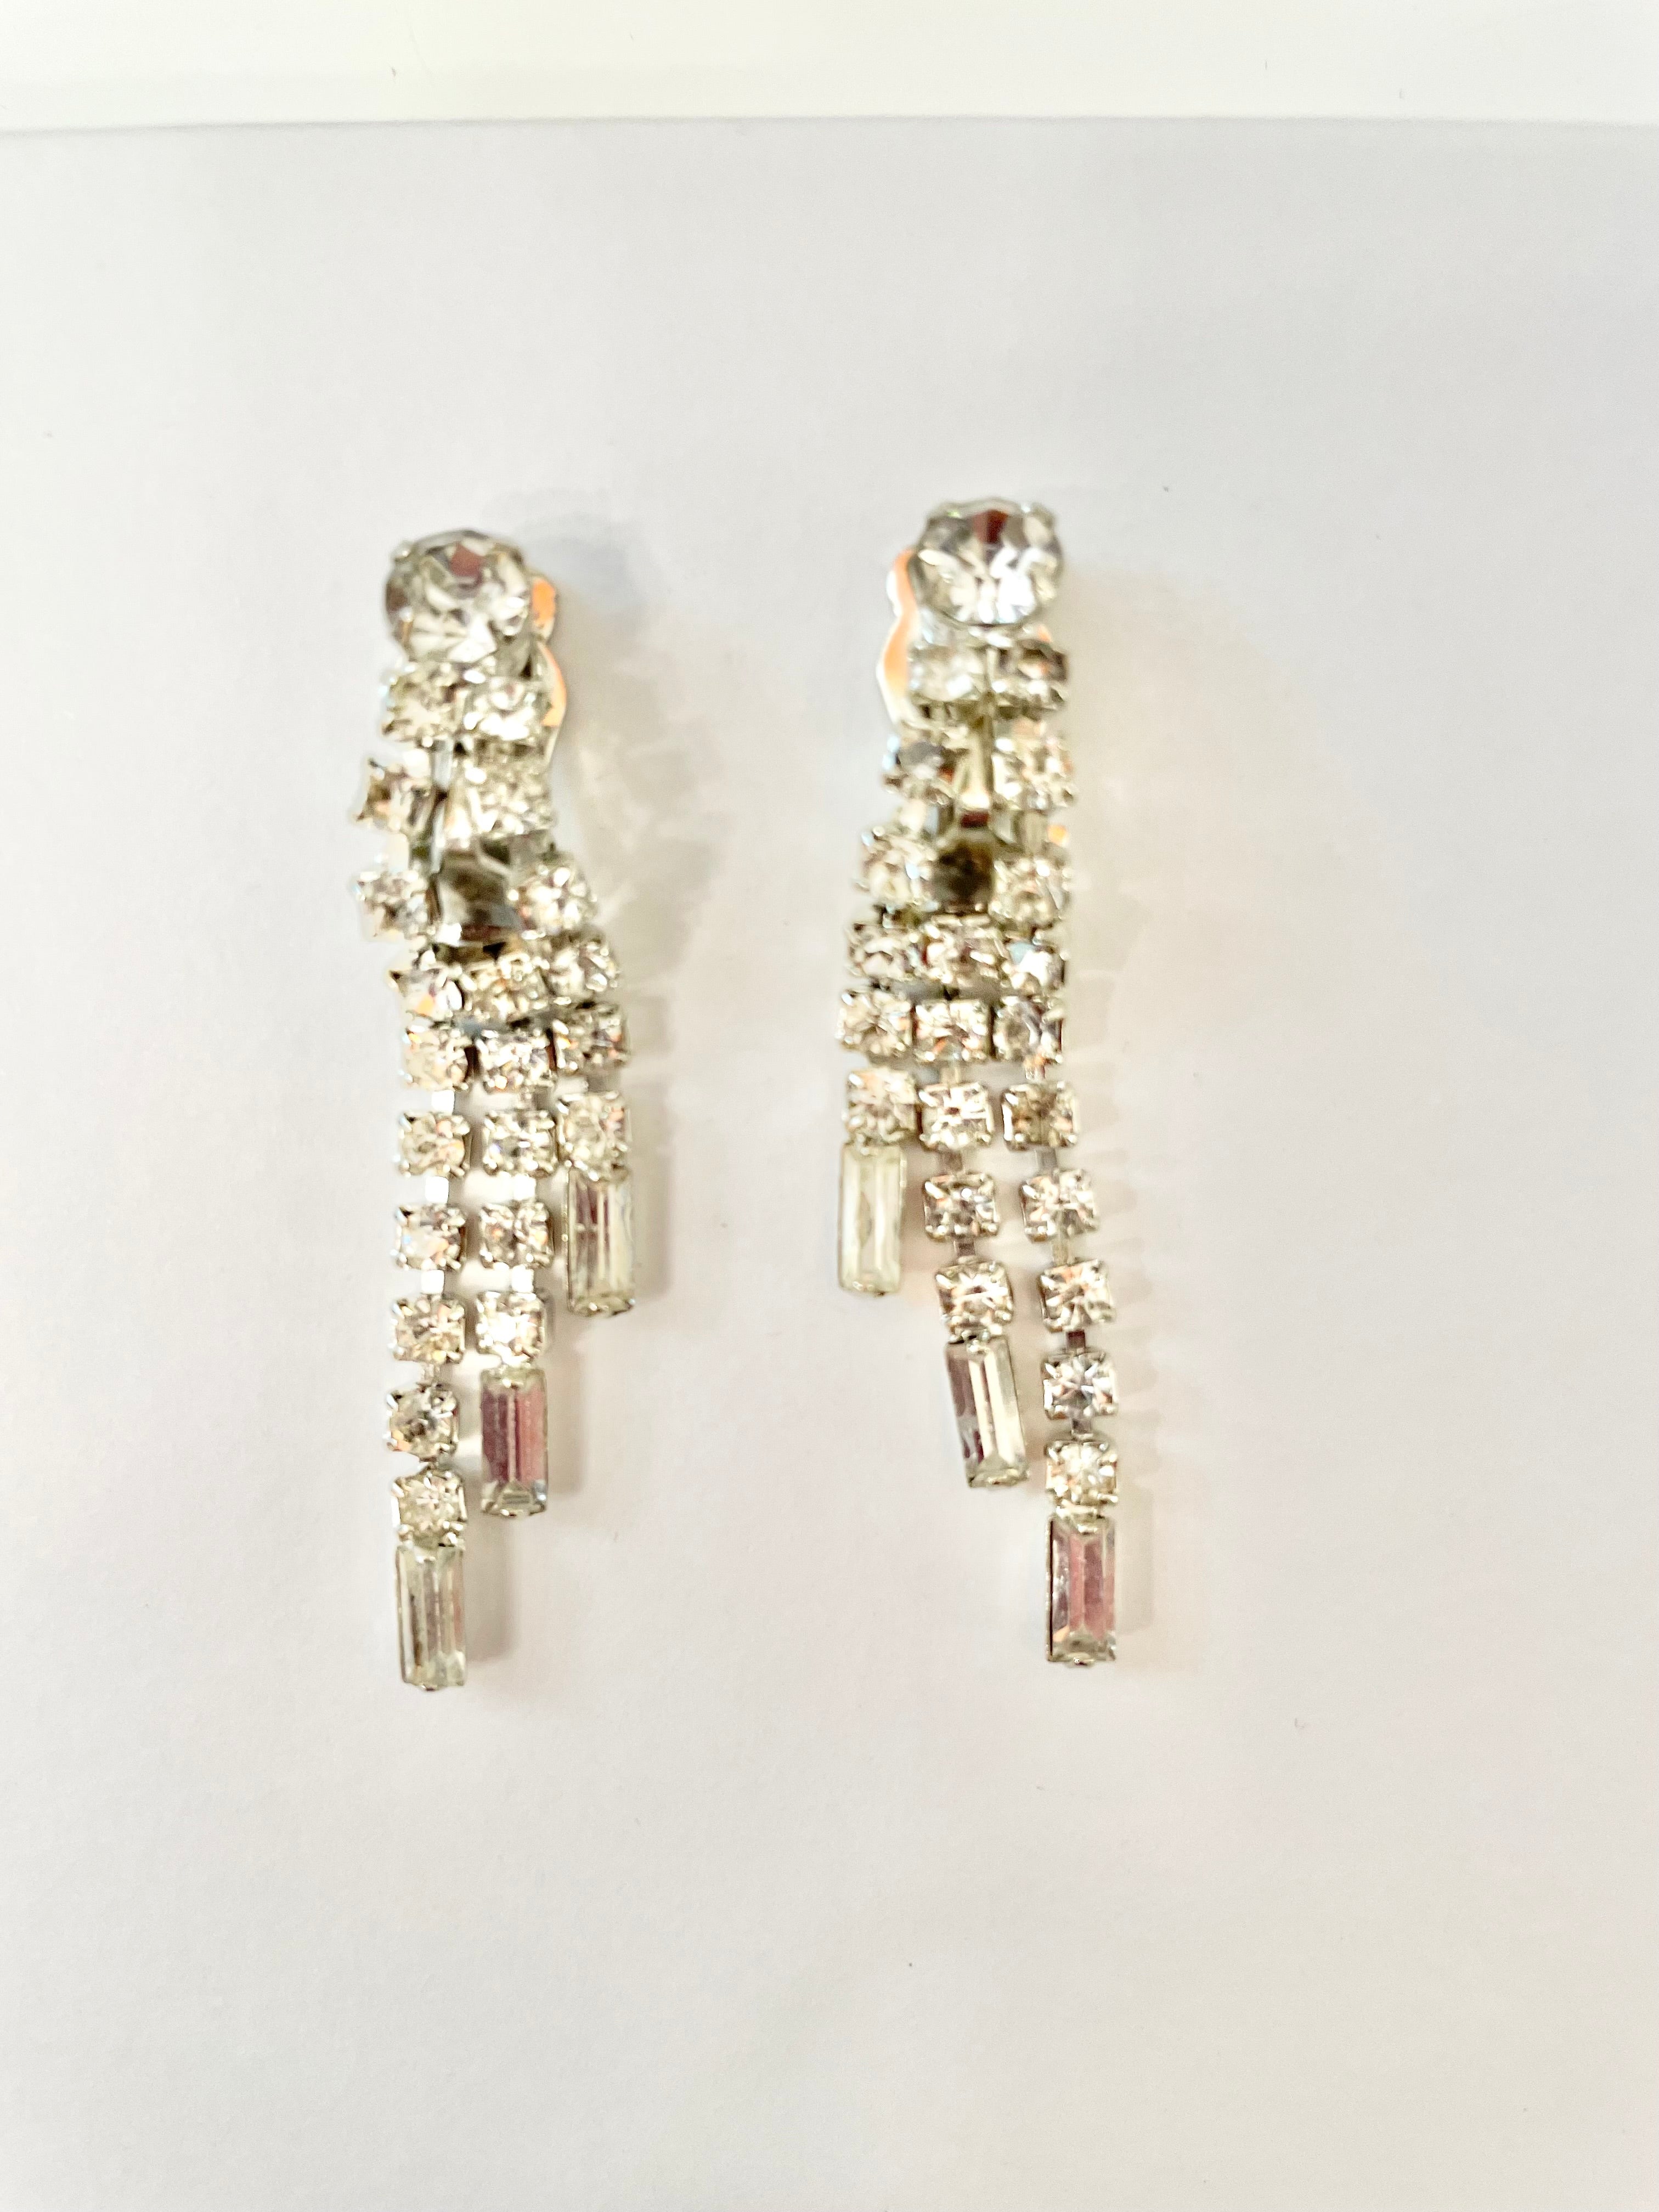 Truly elegant 1960's drop earrings... so glamorous!